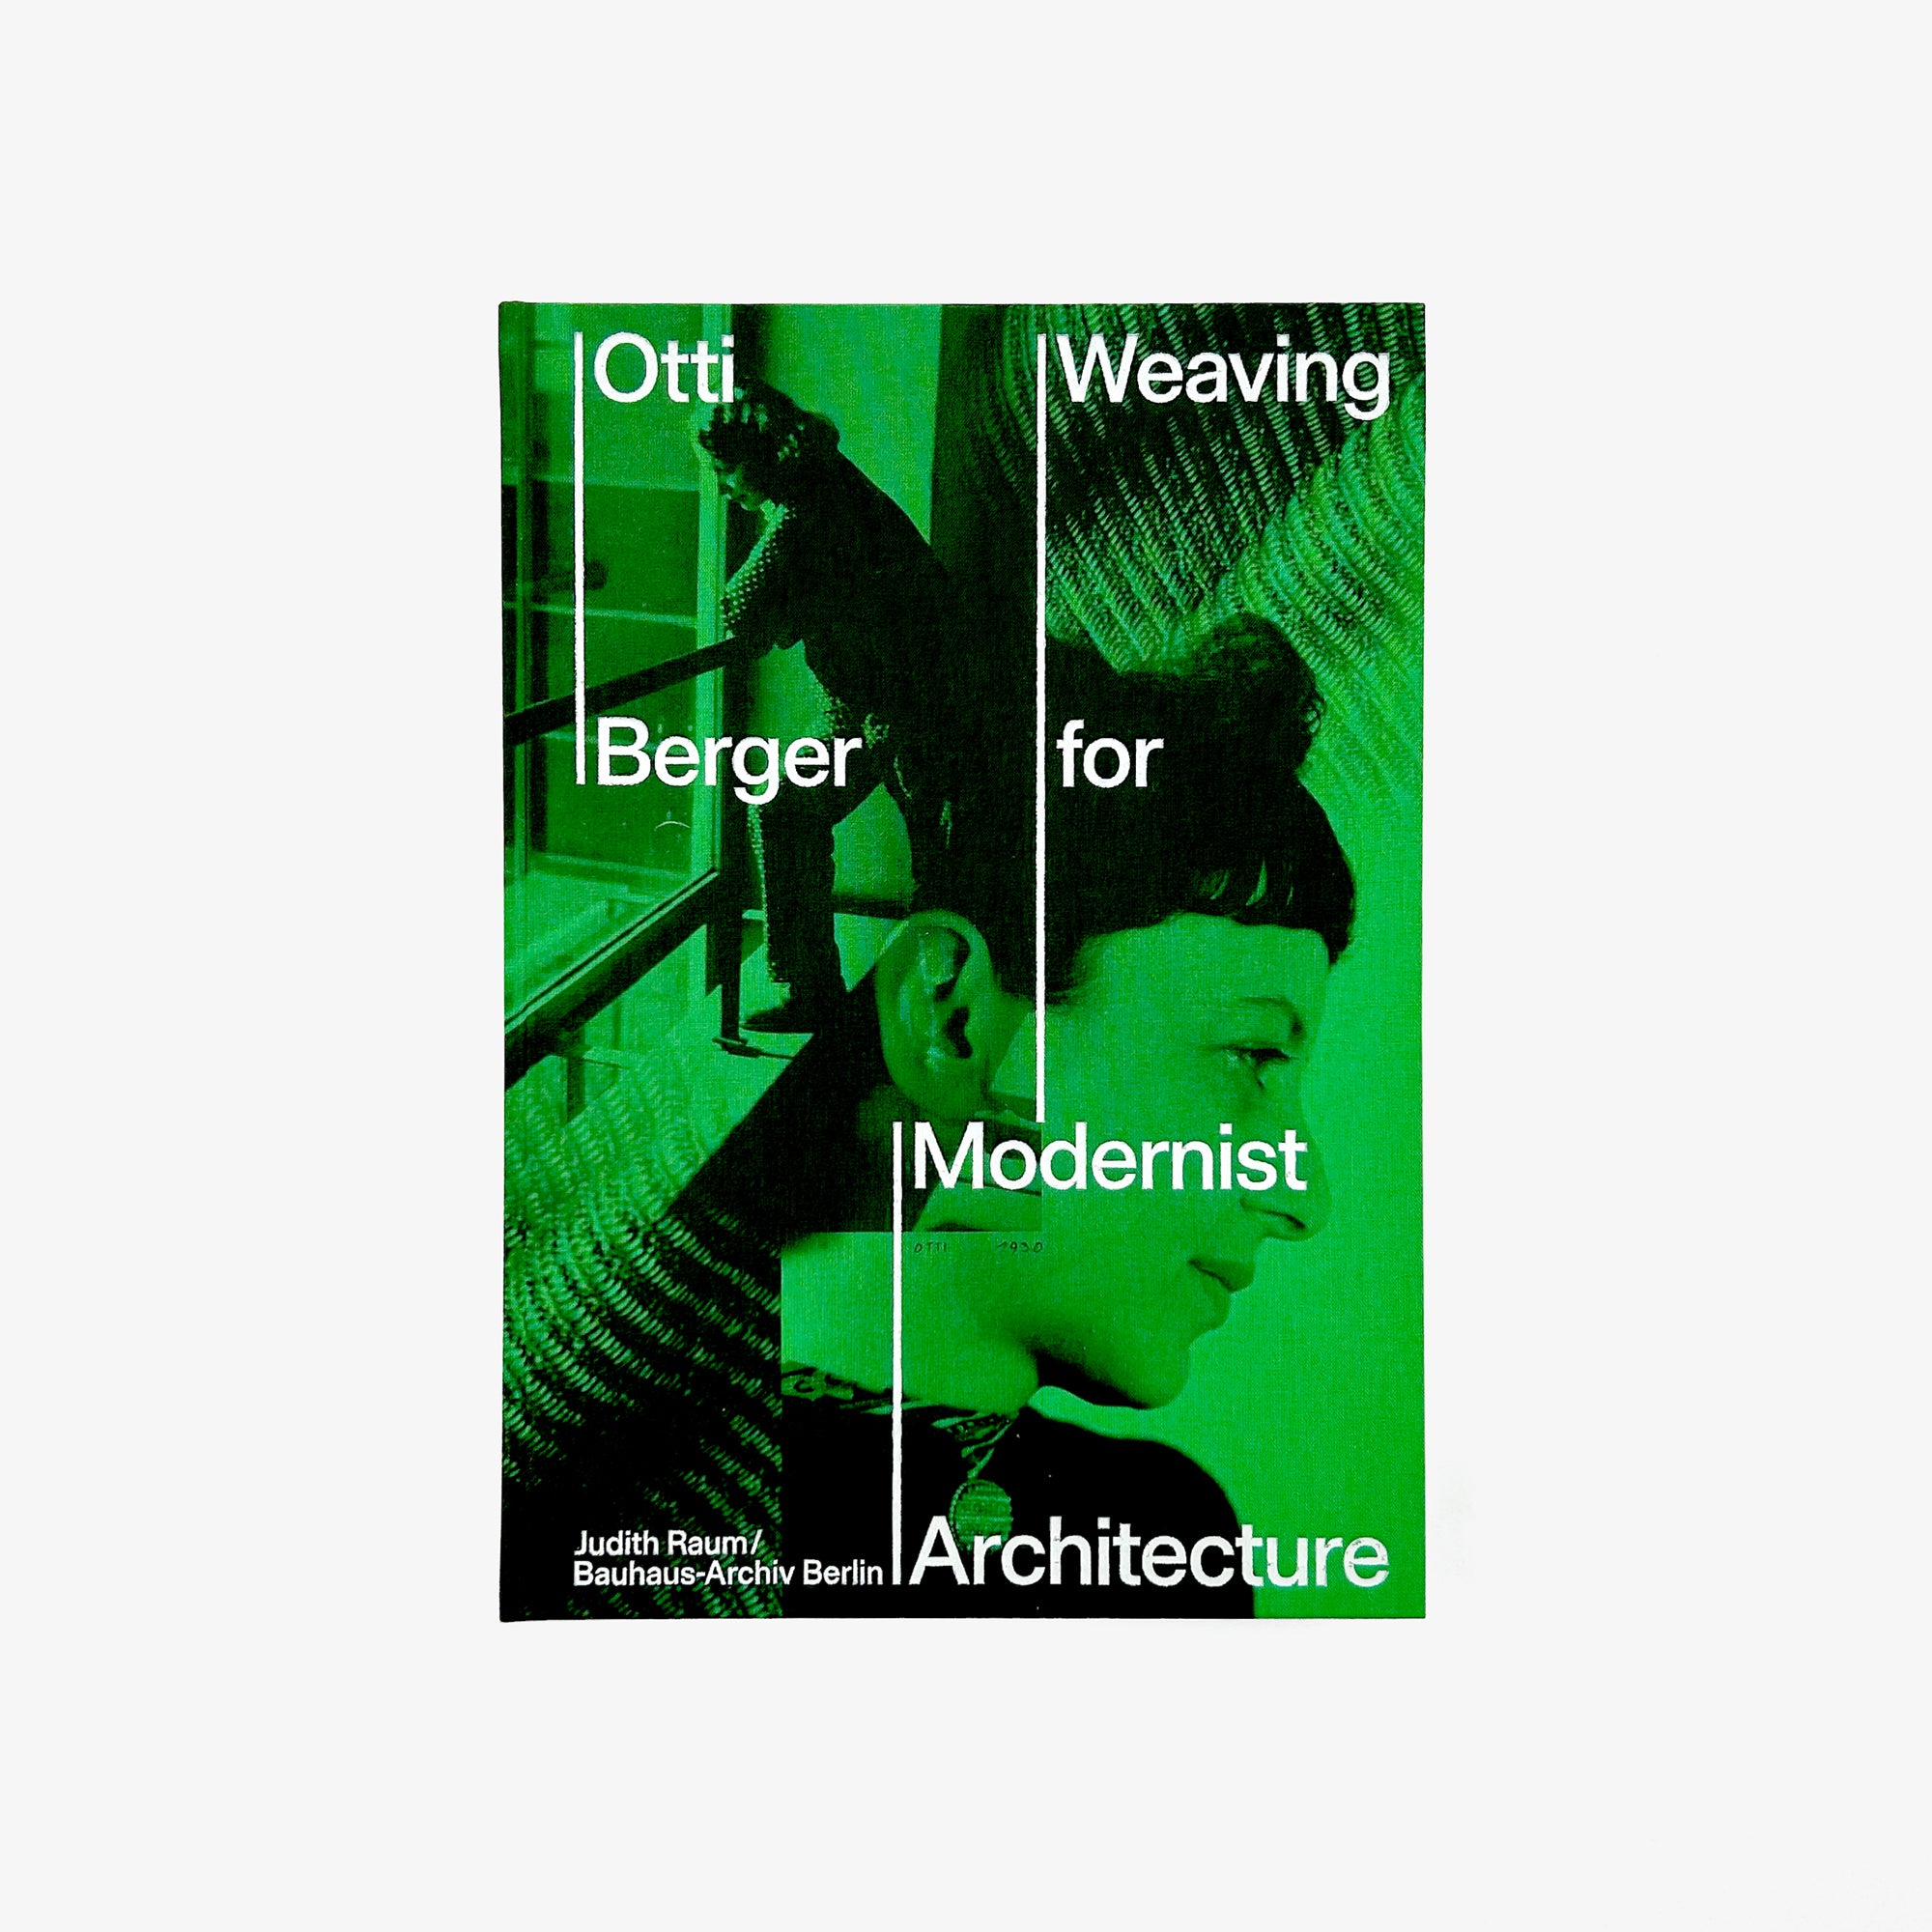 Otti Berger: Weaving for Modernist Architecture